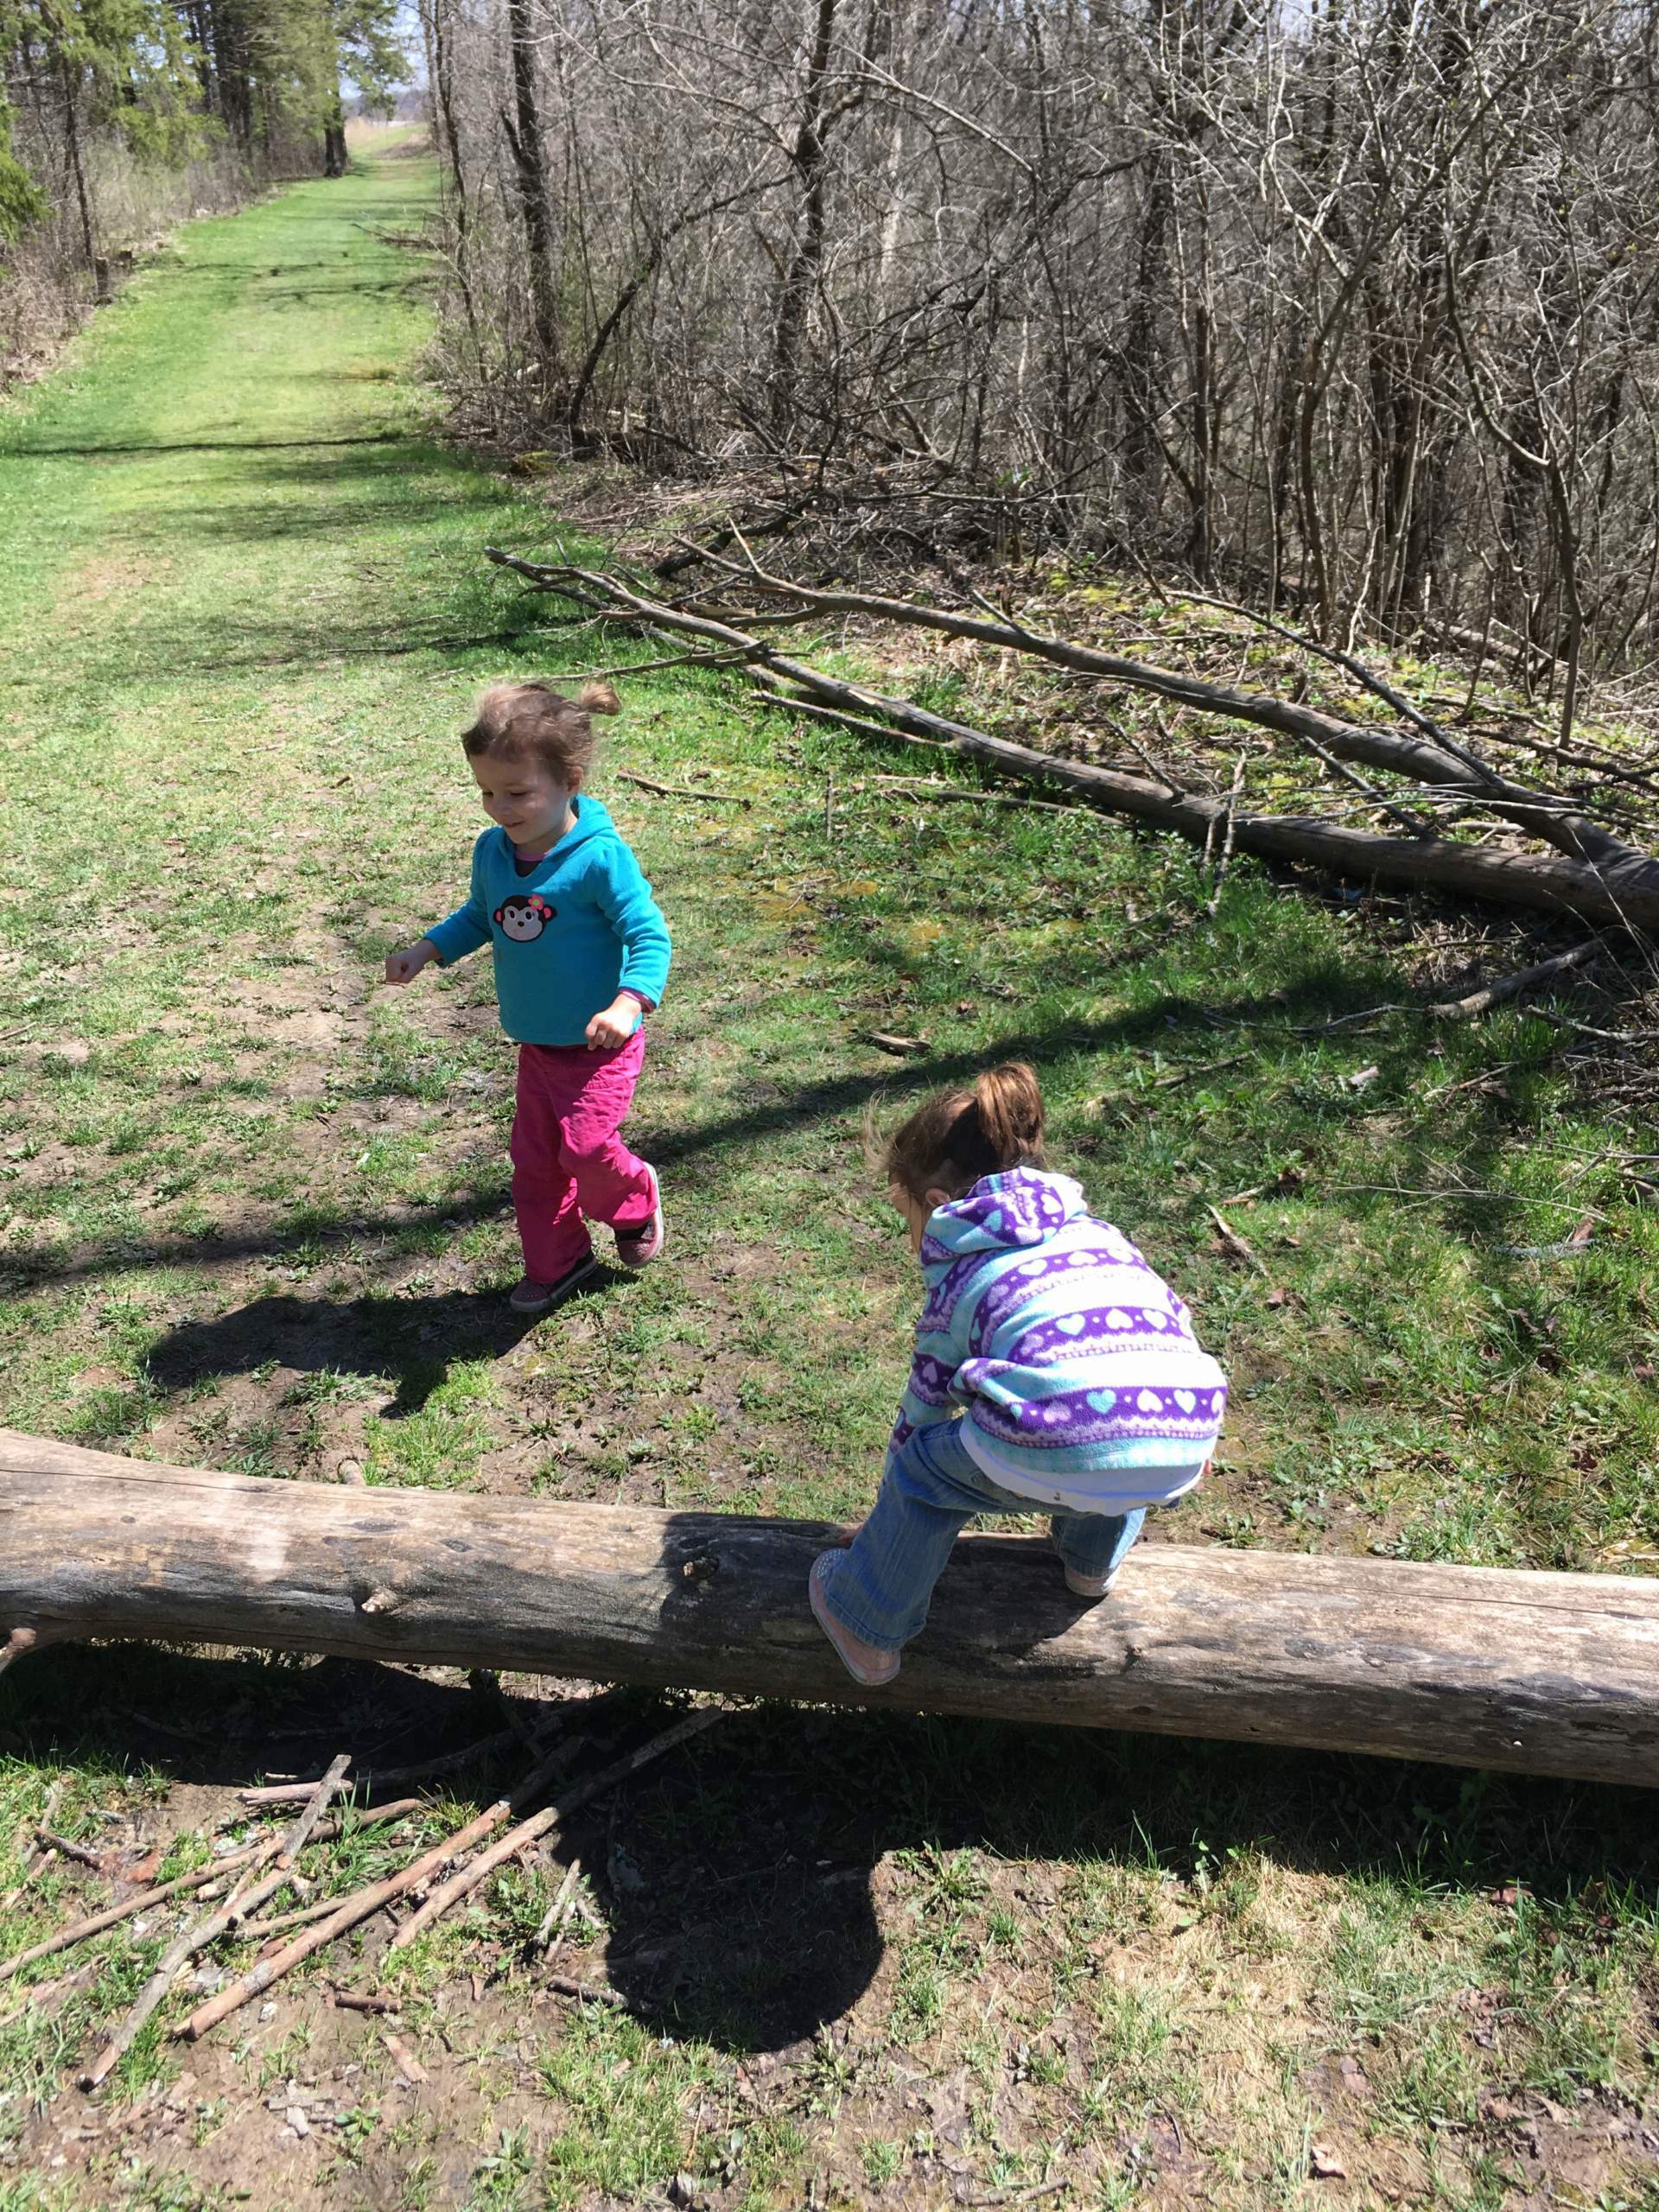 Two Little Kids Field Herping in the Grass and Fallen Logs